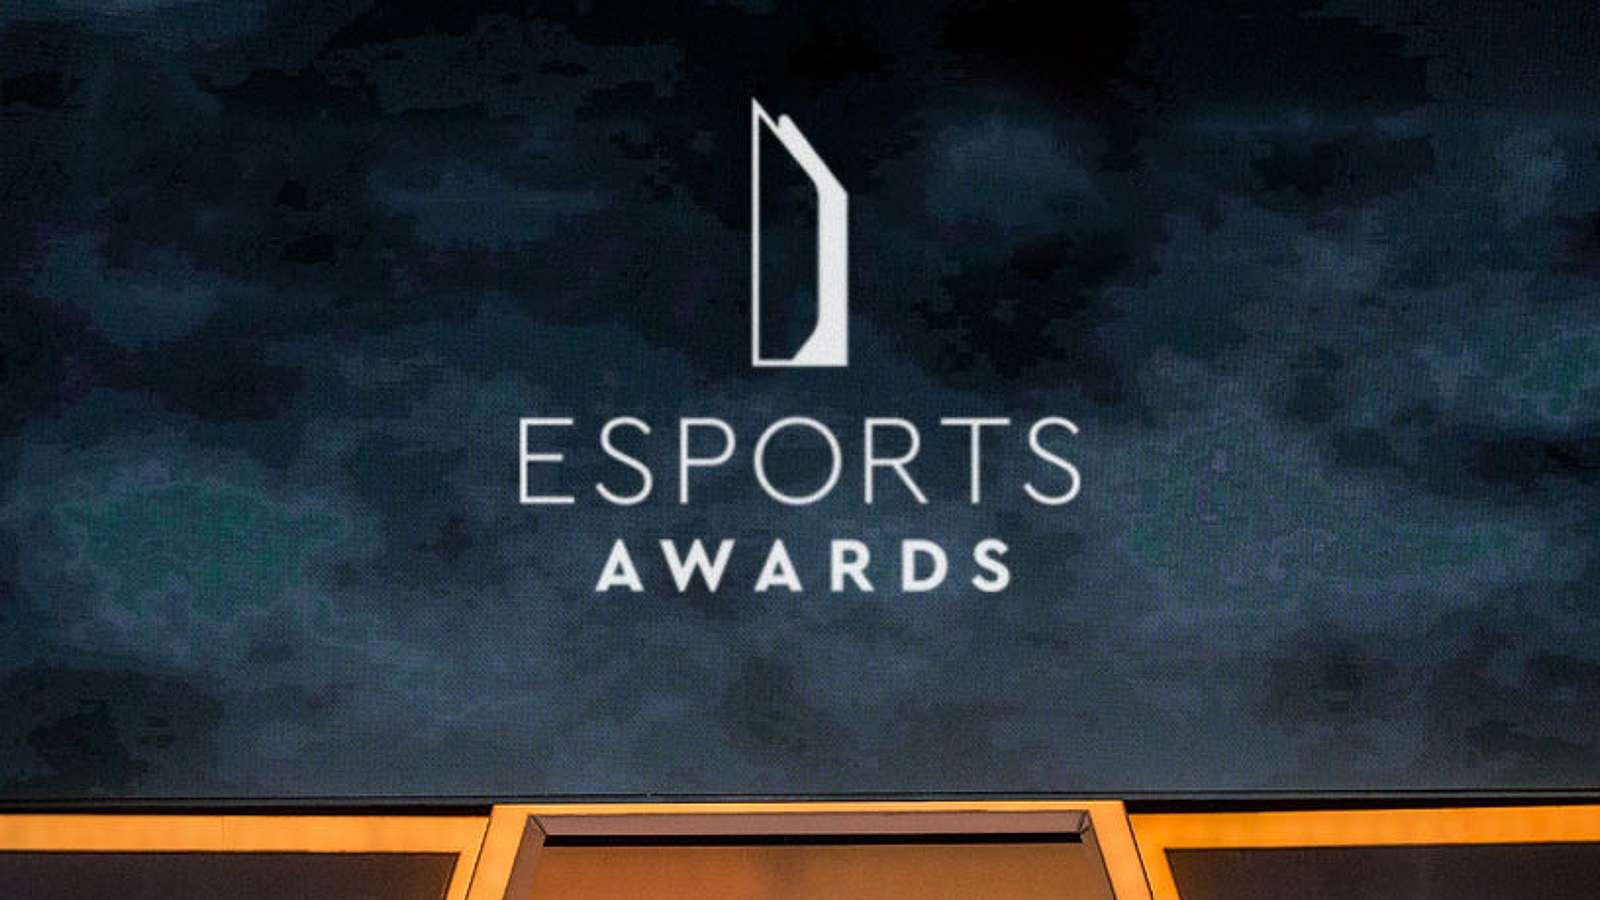 Esports Awards stage logo